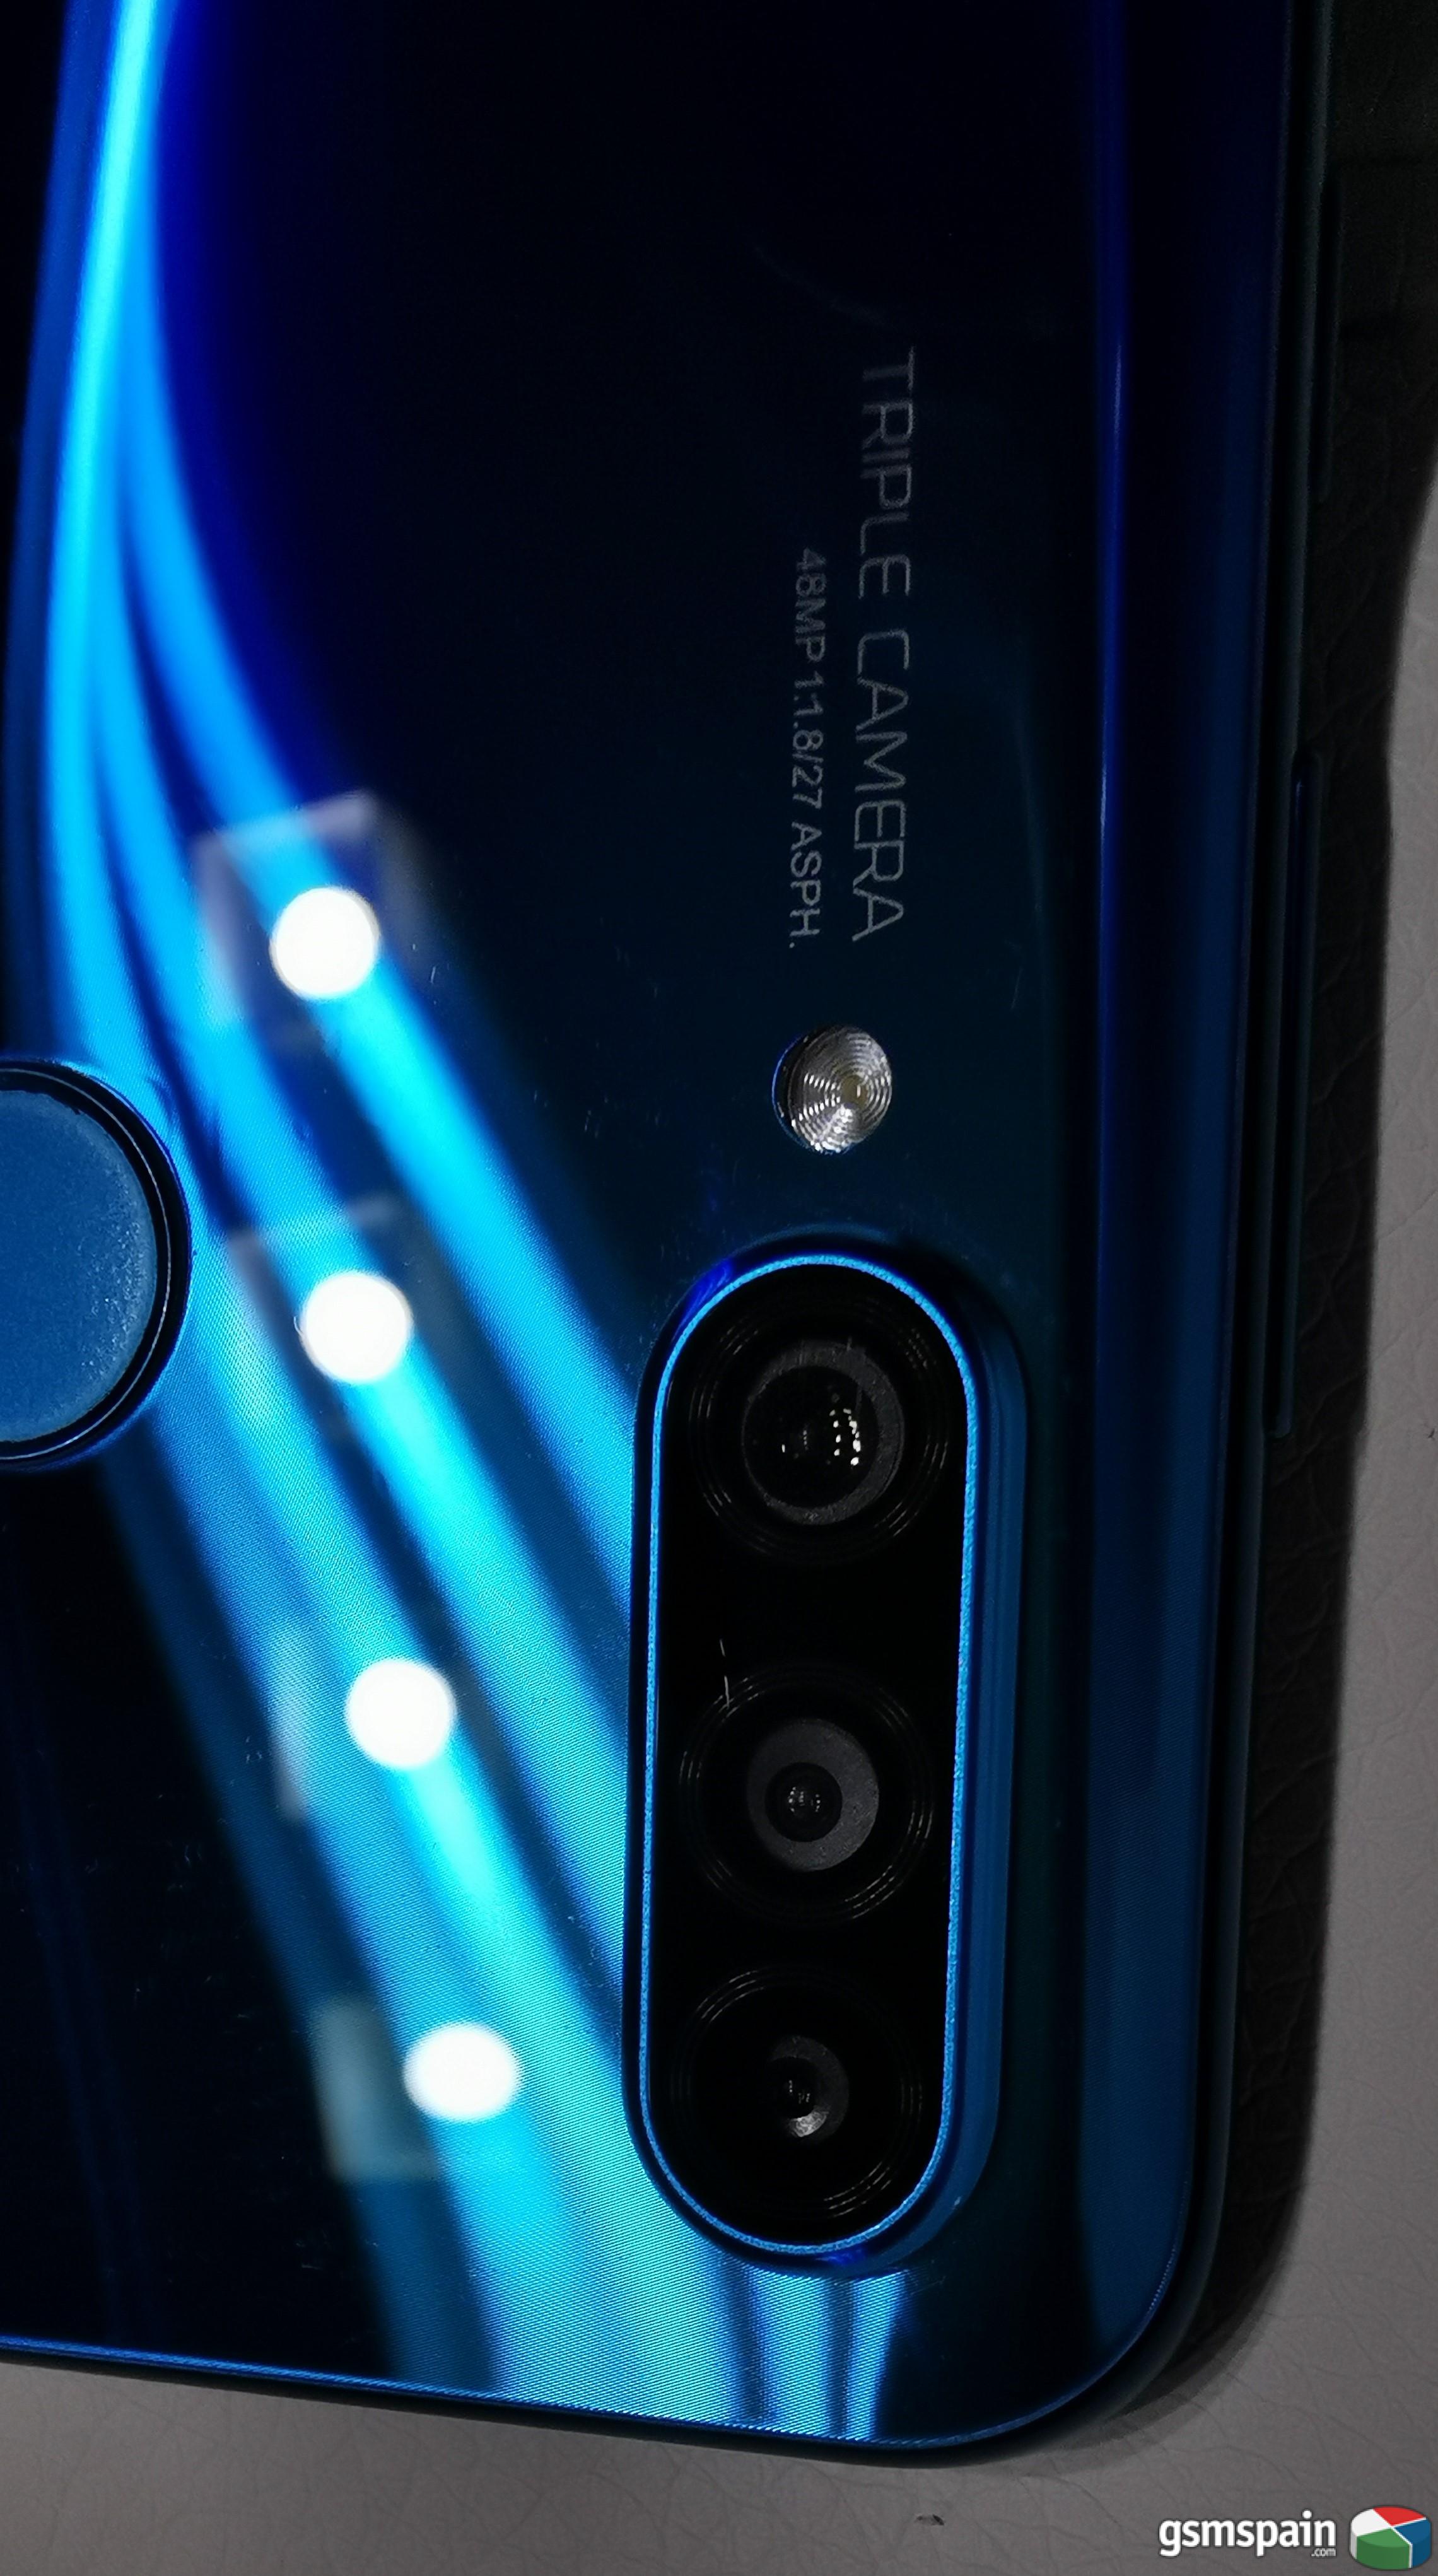 [VENDO] Huawei P30 Lite Azul Versin 4Gb. Ram, 64 Mp Camara, 128 Gb Almacenamiento